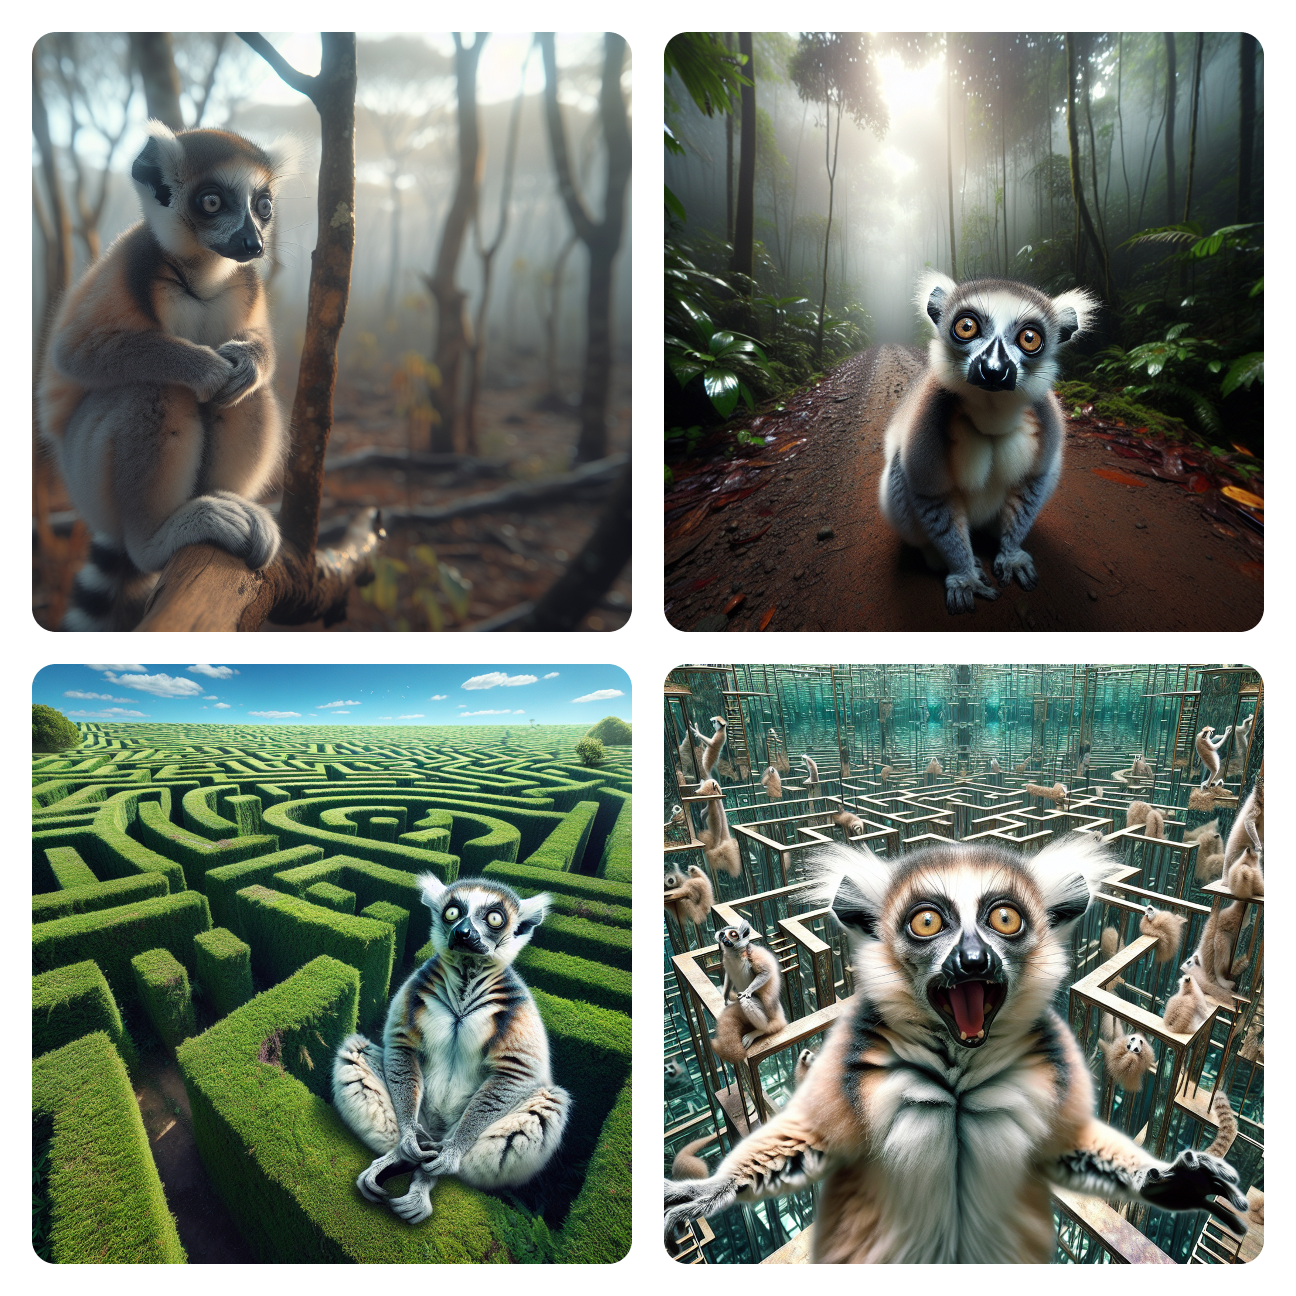 Image: The Lemur's Labyrinth: Path of Perplexity